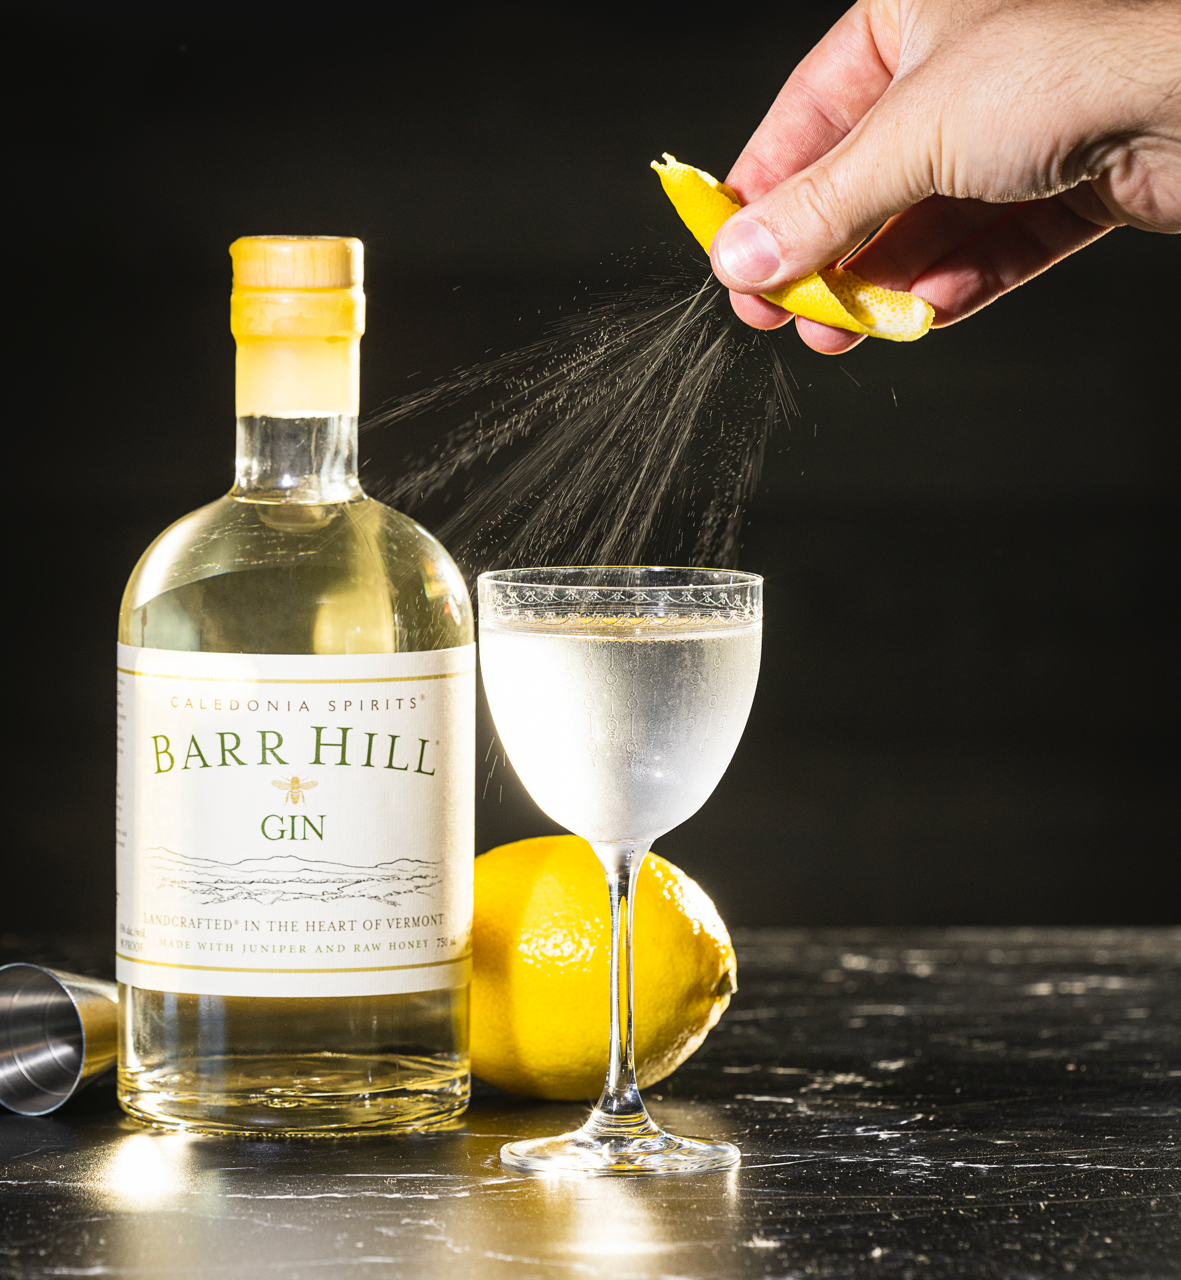 Classic gin martini with a lemon twist